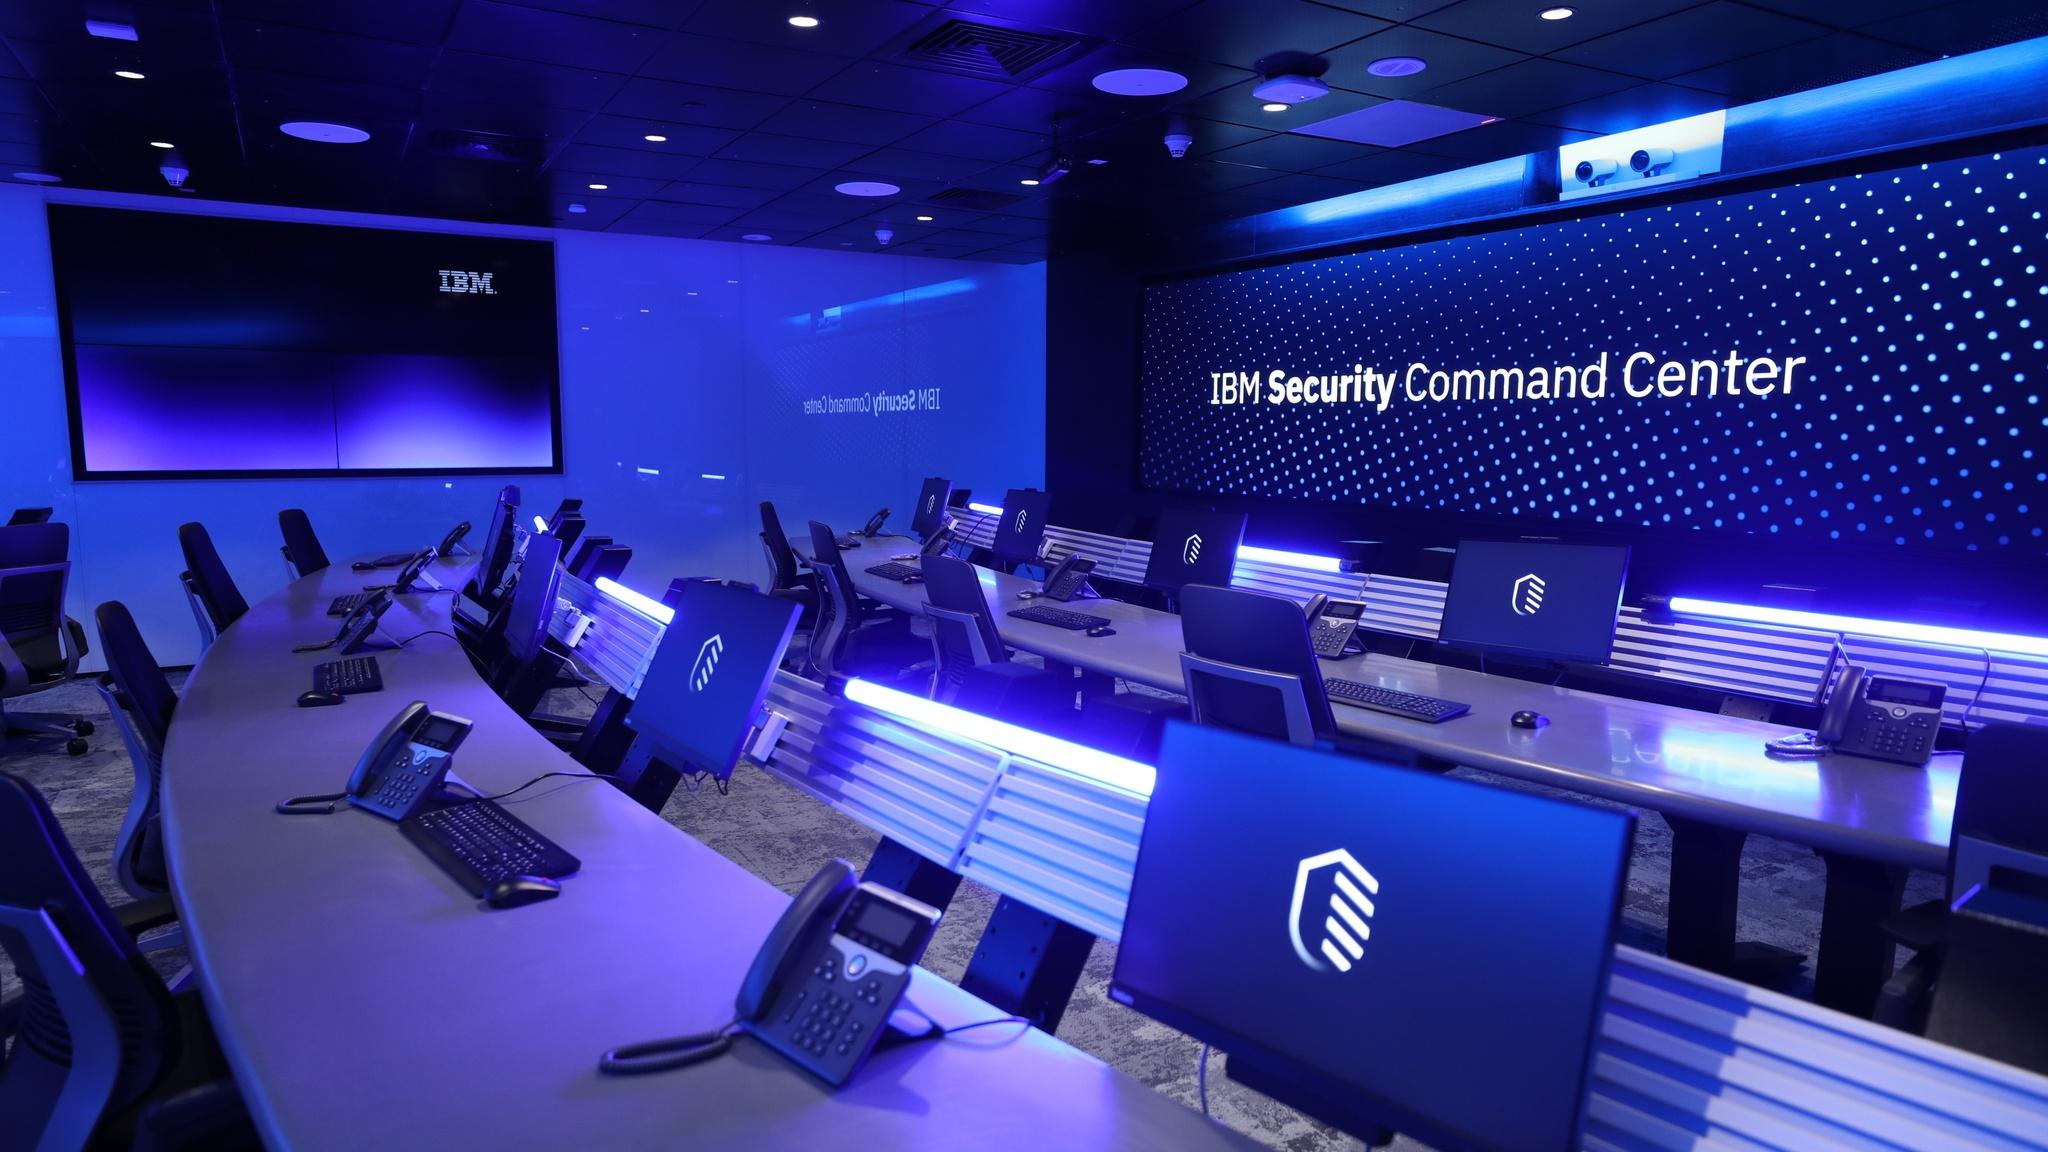 IBM unveiled new Cybersecurity Hub in Bengaluru to address cyberattack_40.1